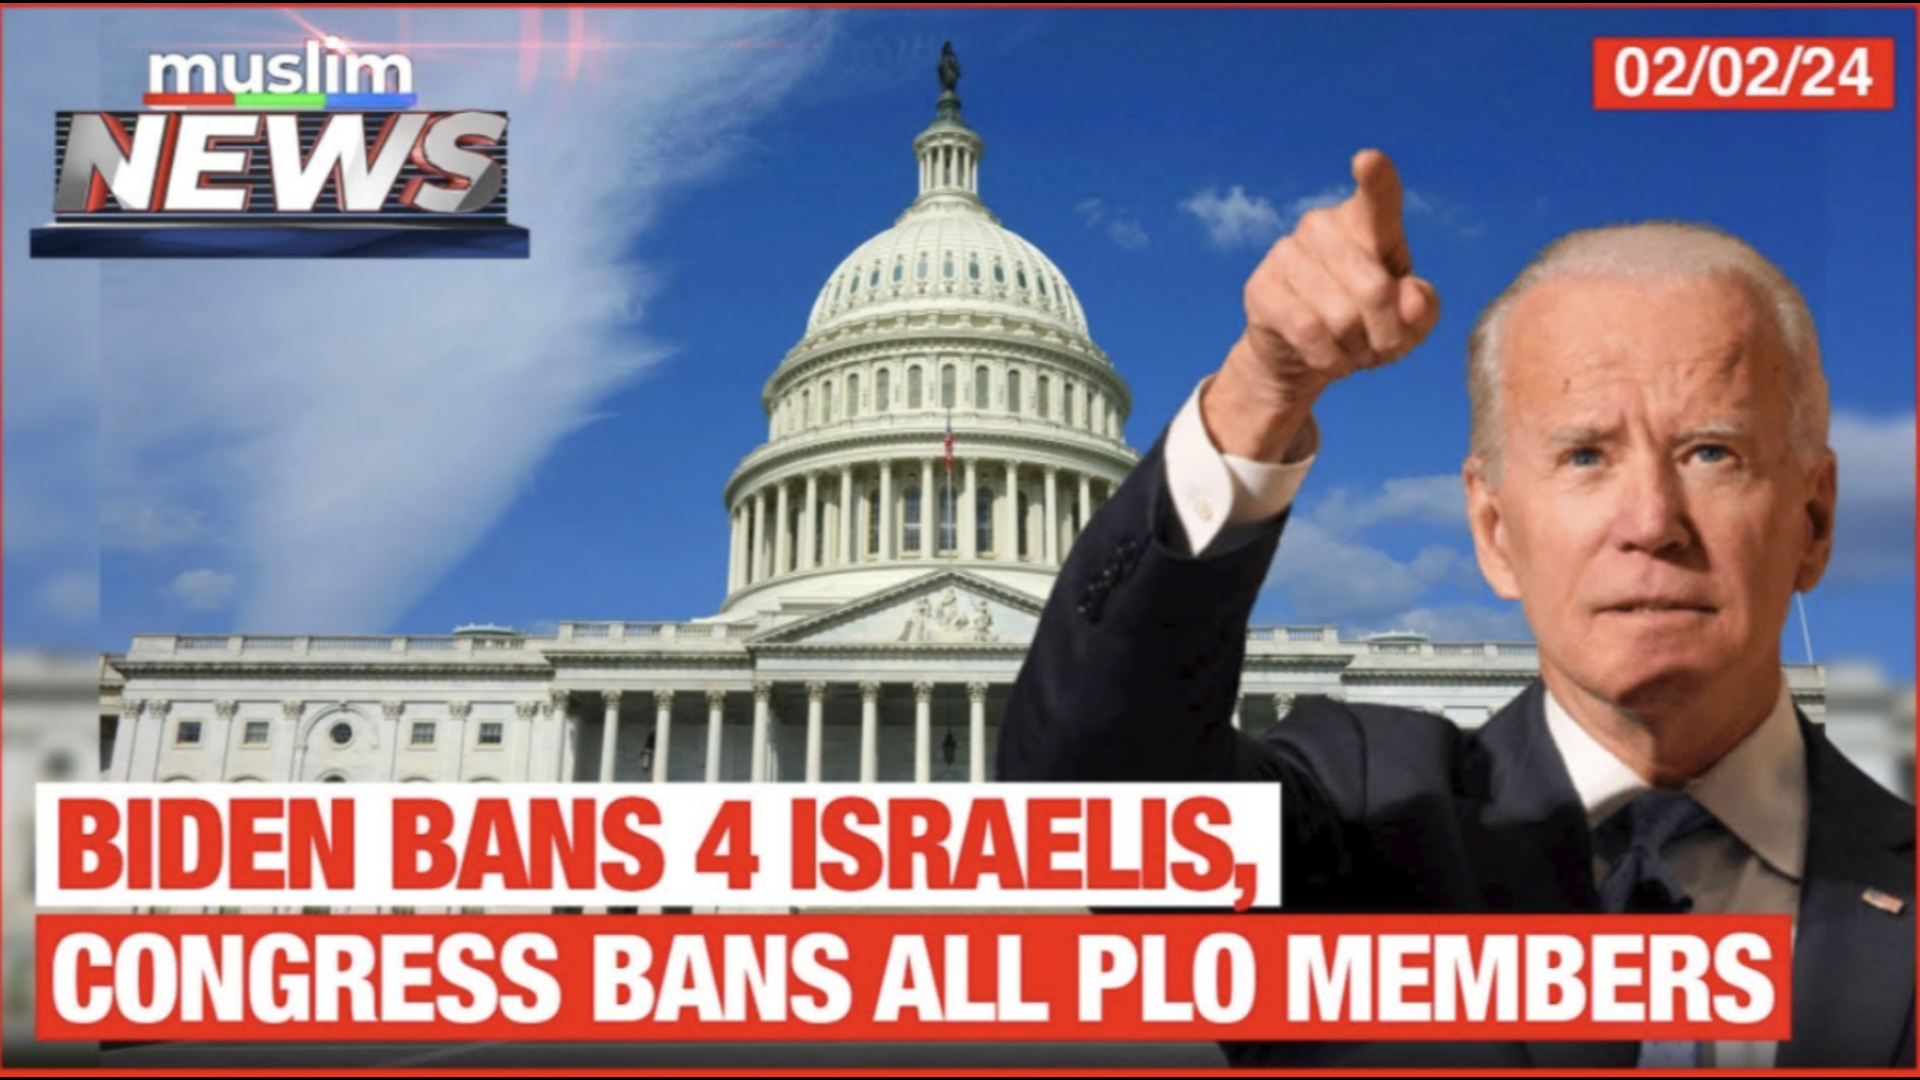 Biden Bans 4 Israelis, Congress Bans all PLO Members | Muslim News | Feb 2, 2024